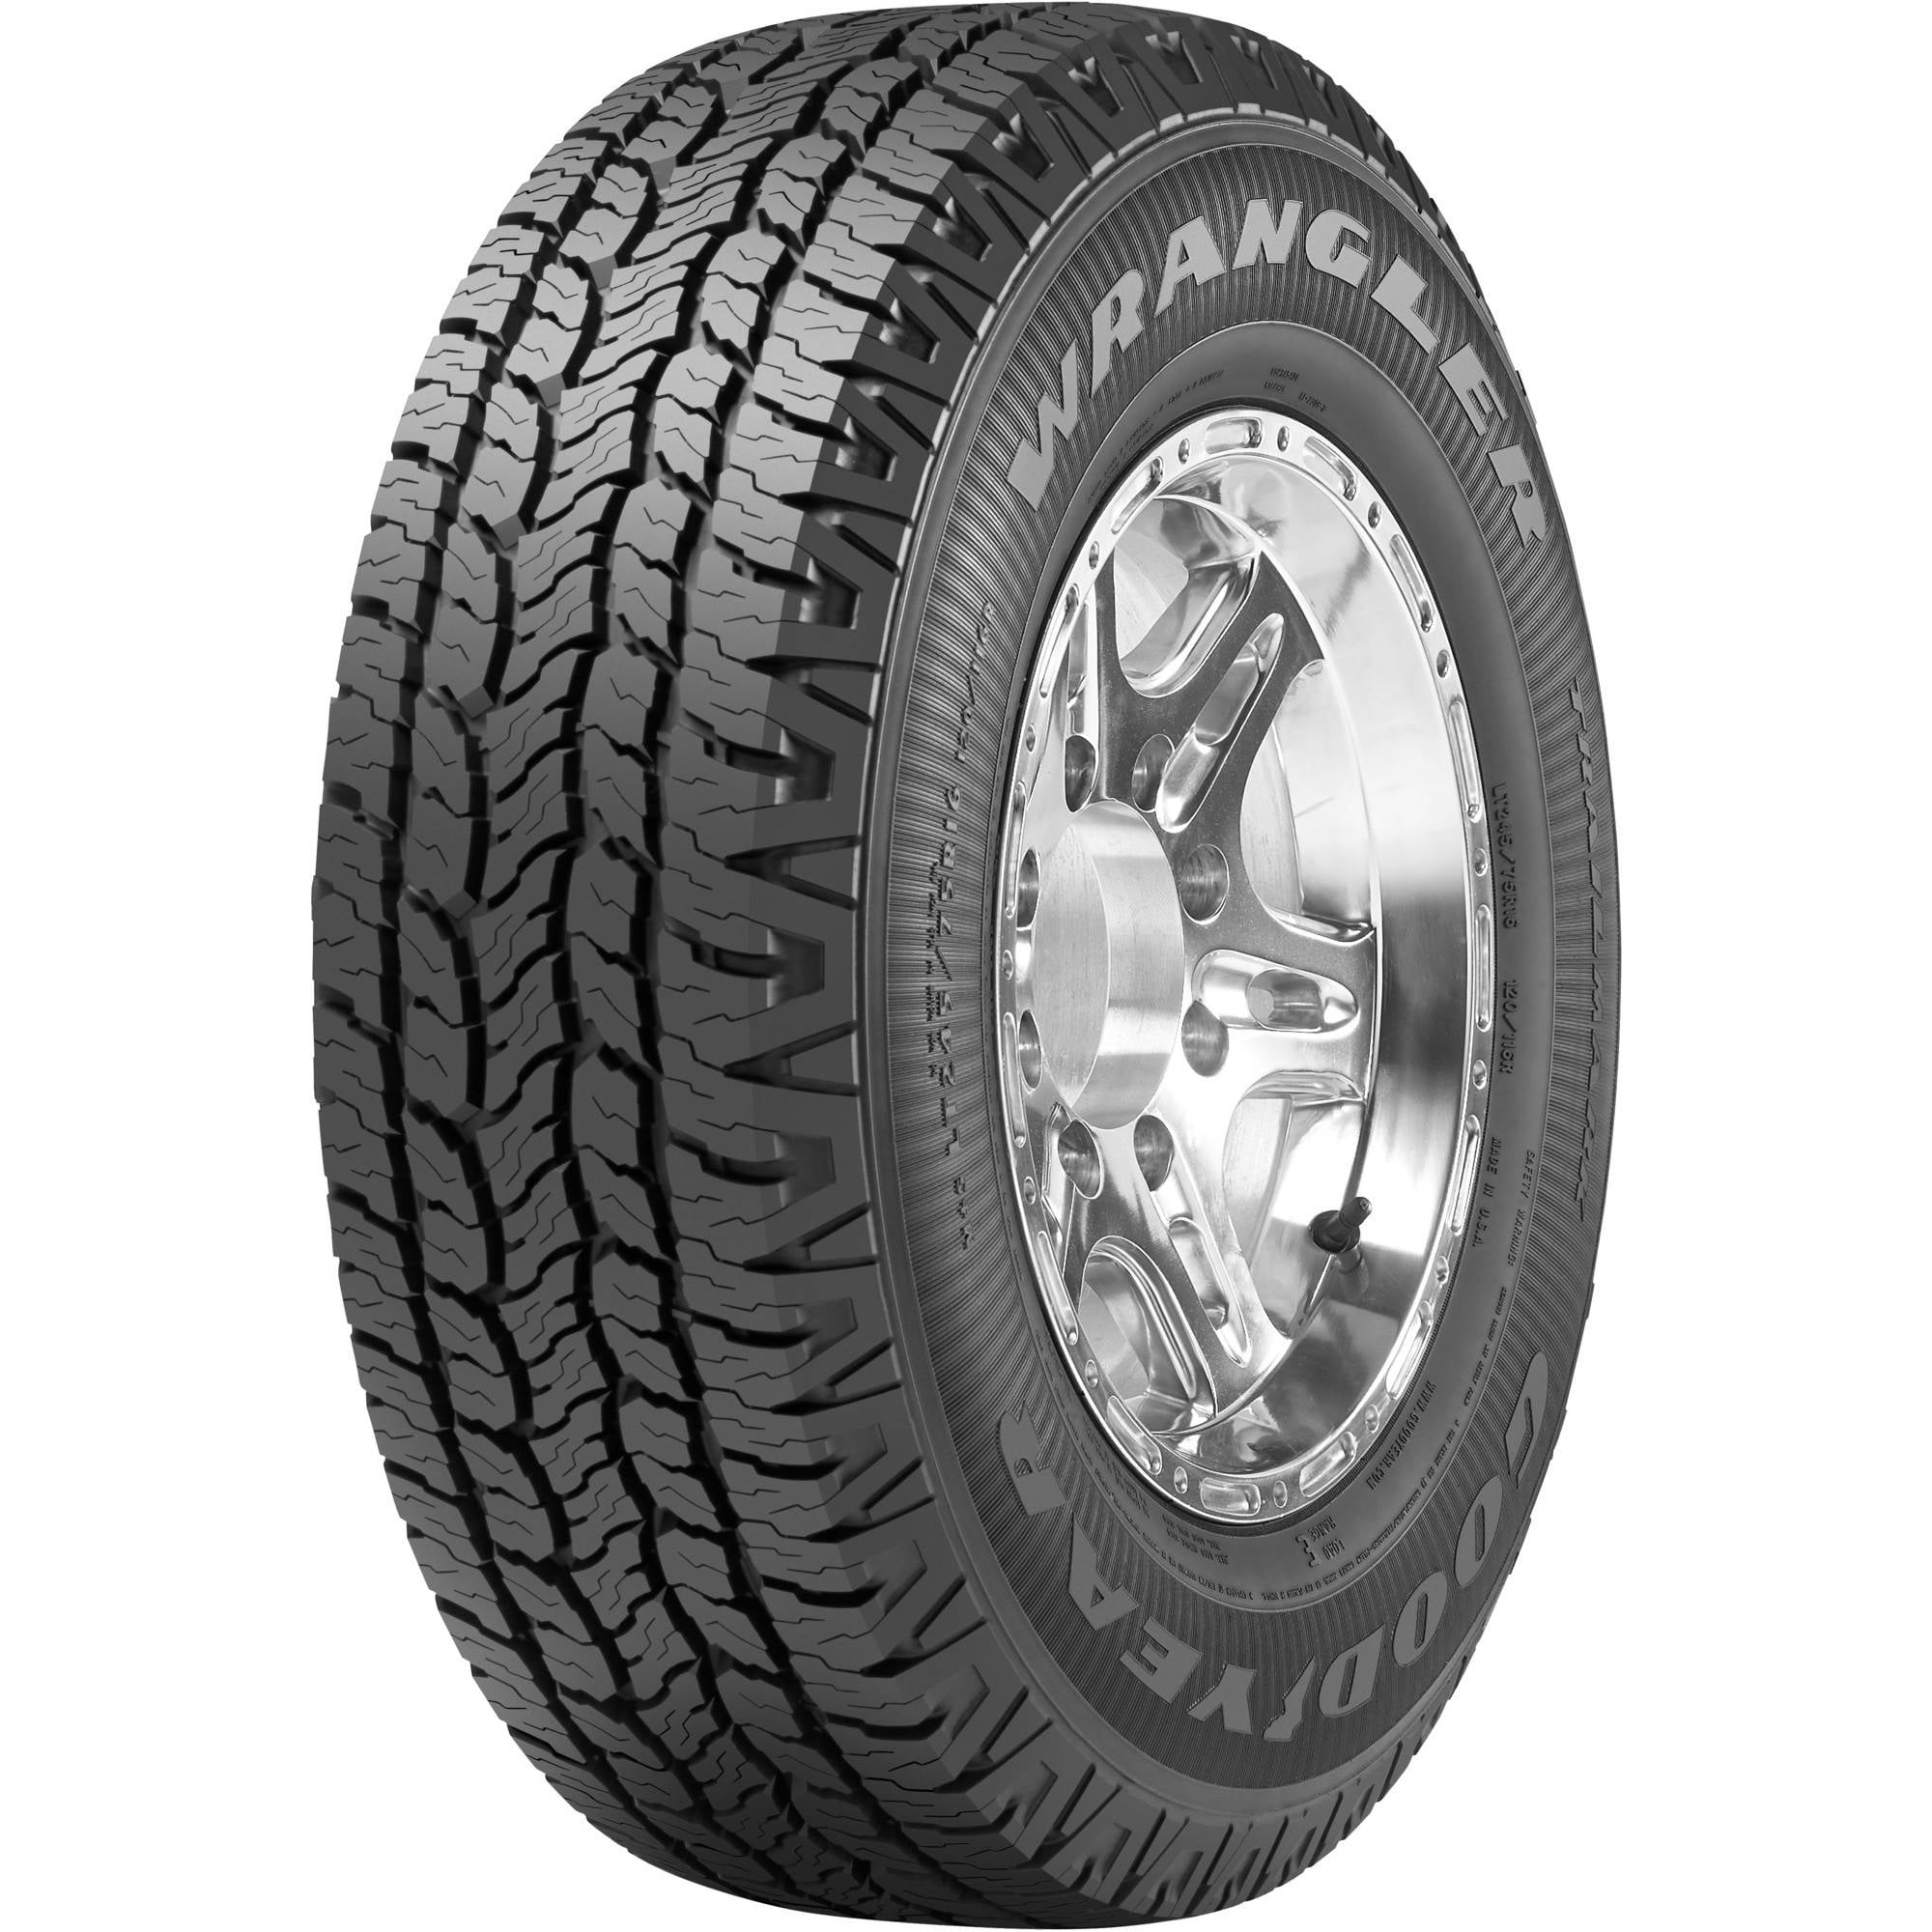 goodyear-wrangler-trailmark-tire-p245-65r17-105t-walmart